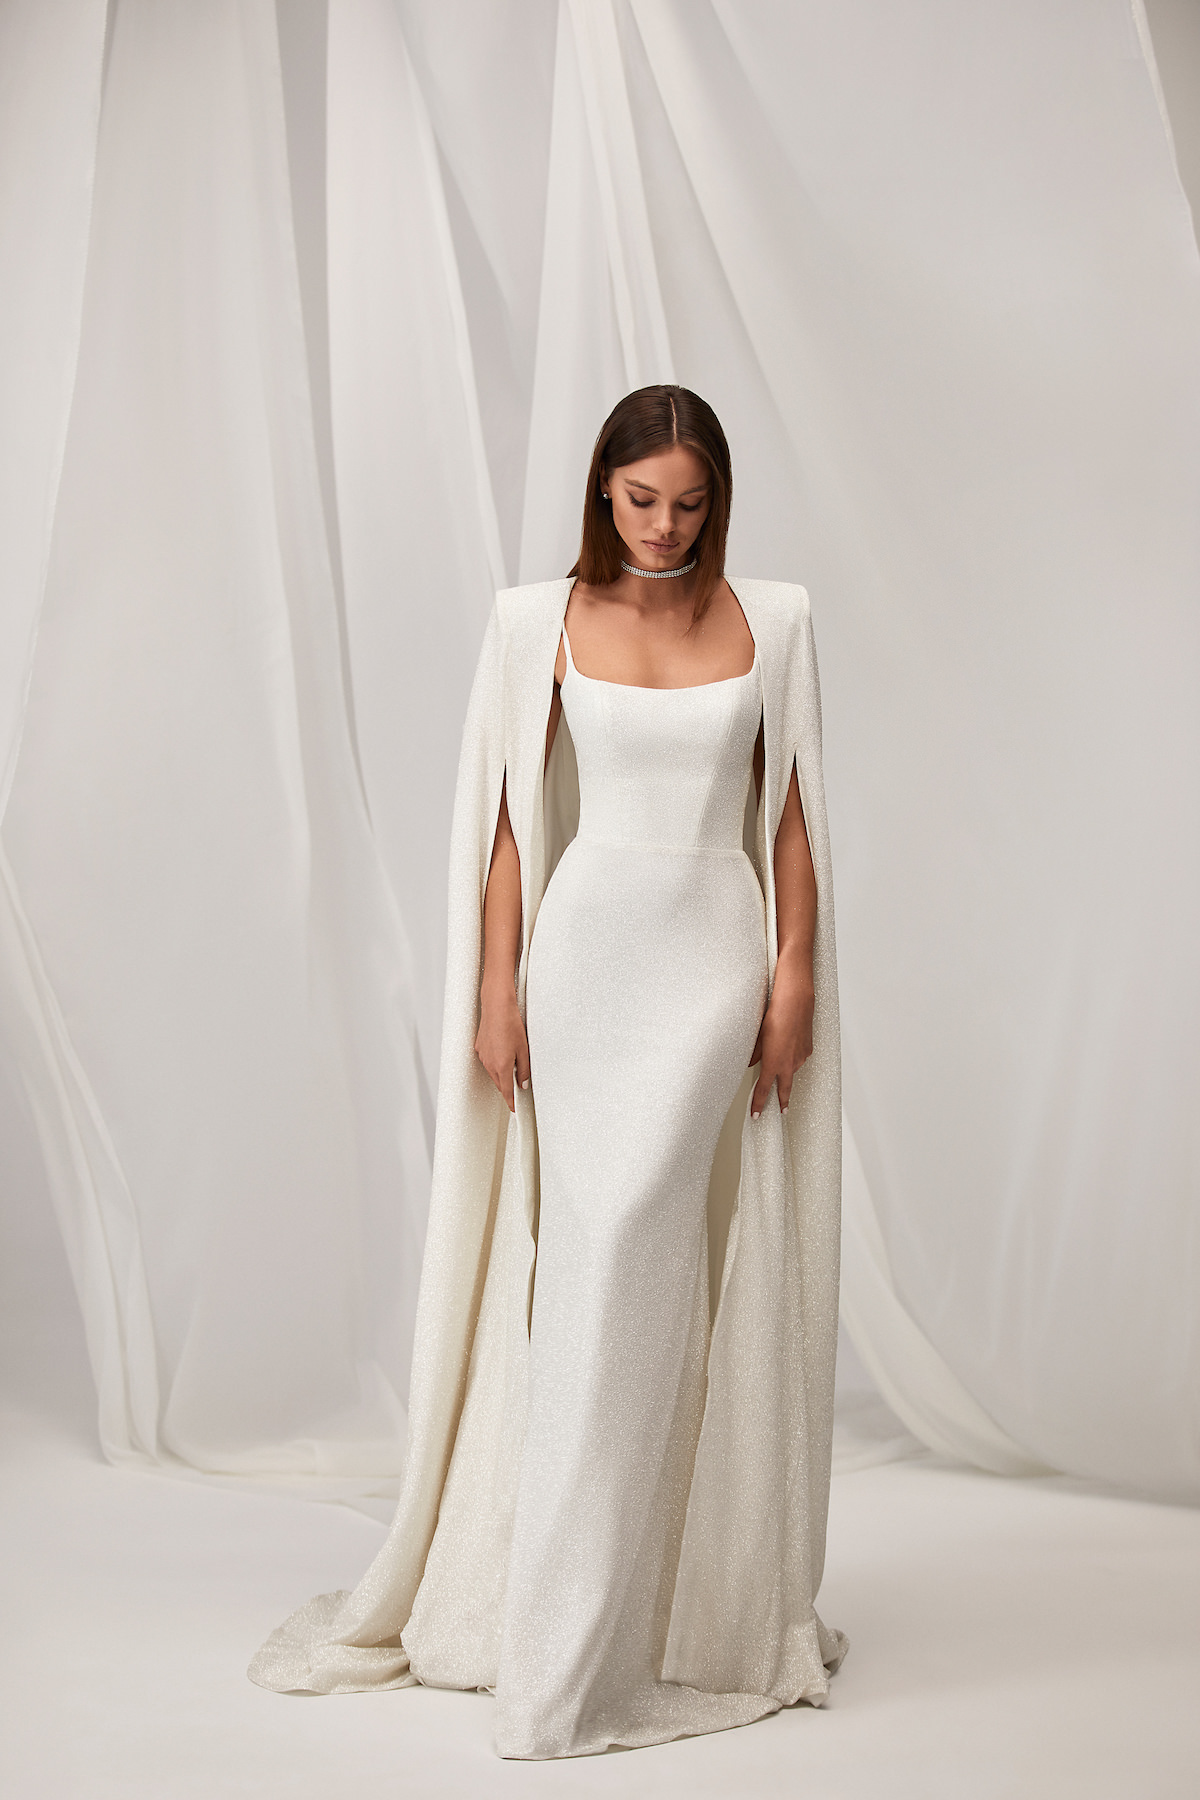 Modern Wedding Dress by Milla Nova - Phoebe White Lace